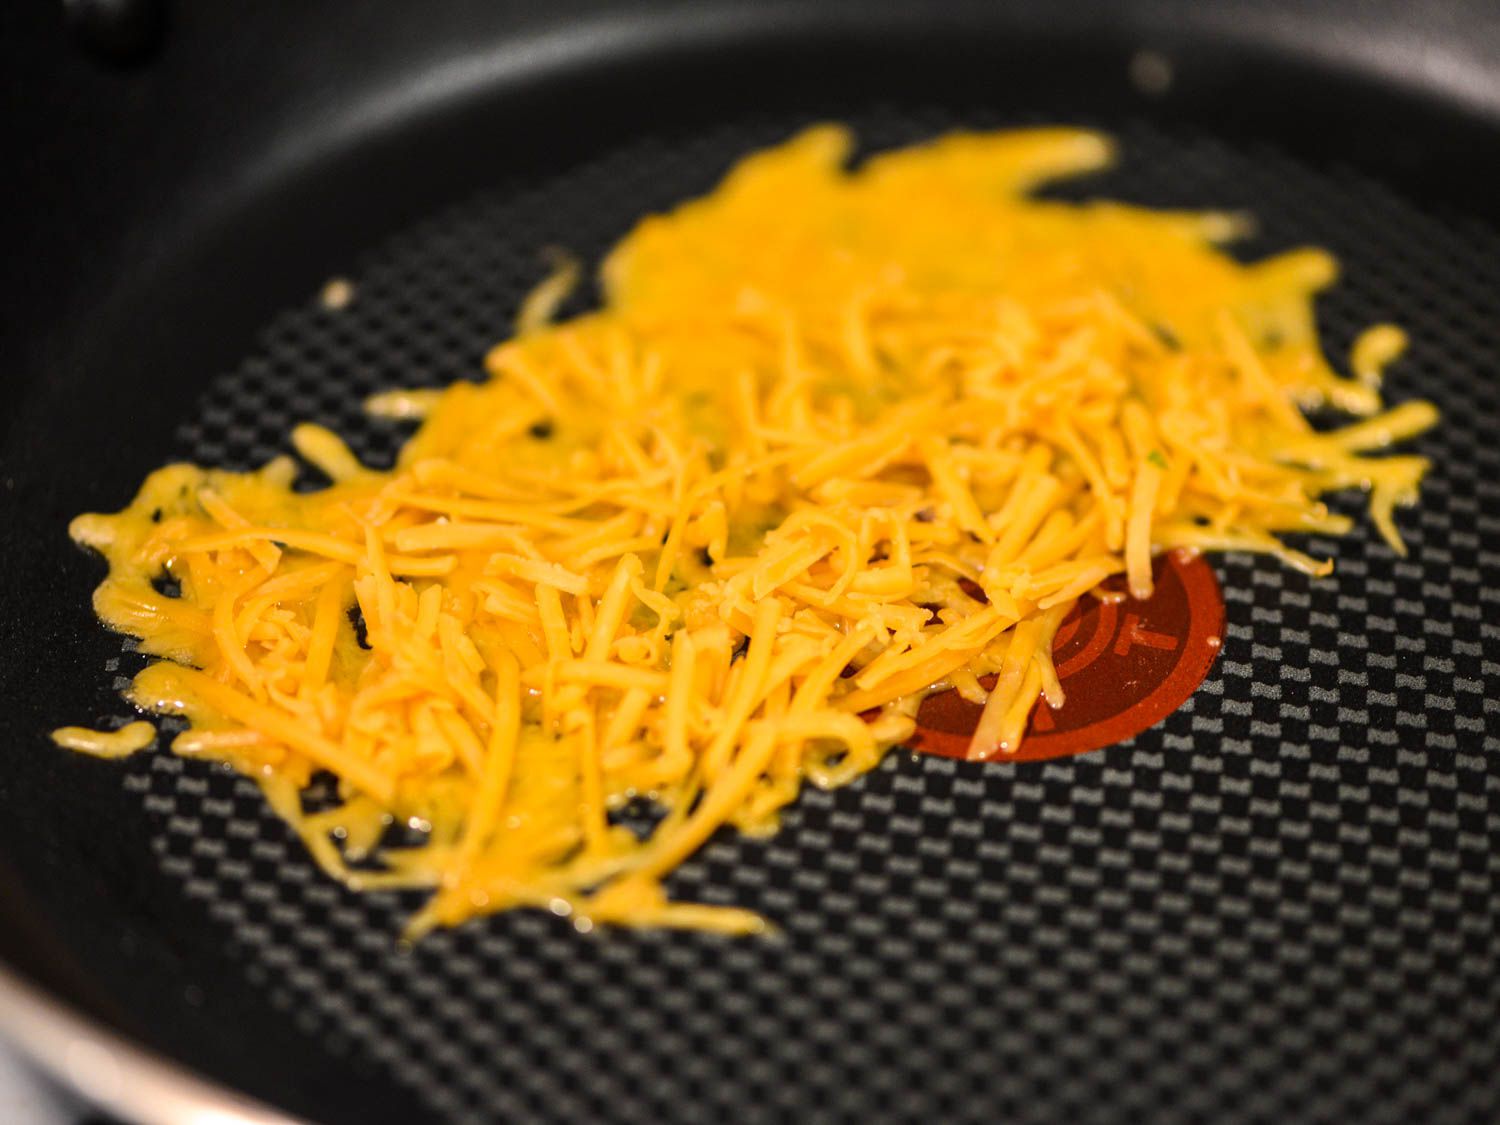 20150422-crispy-cheese-tacos-cheese-melting-joshua-bousel.jpg